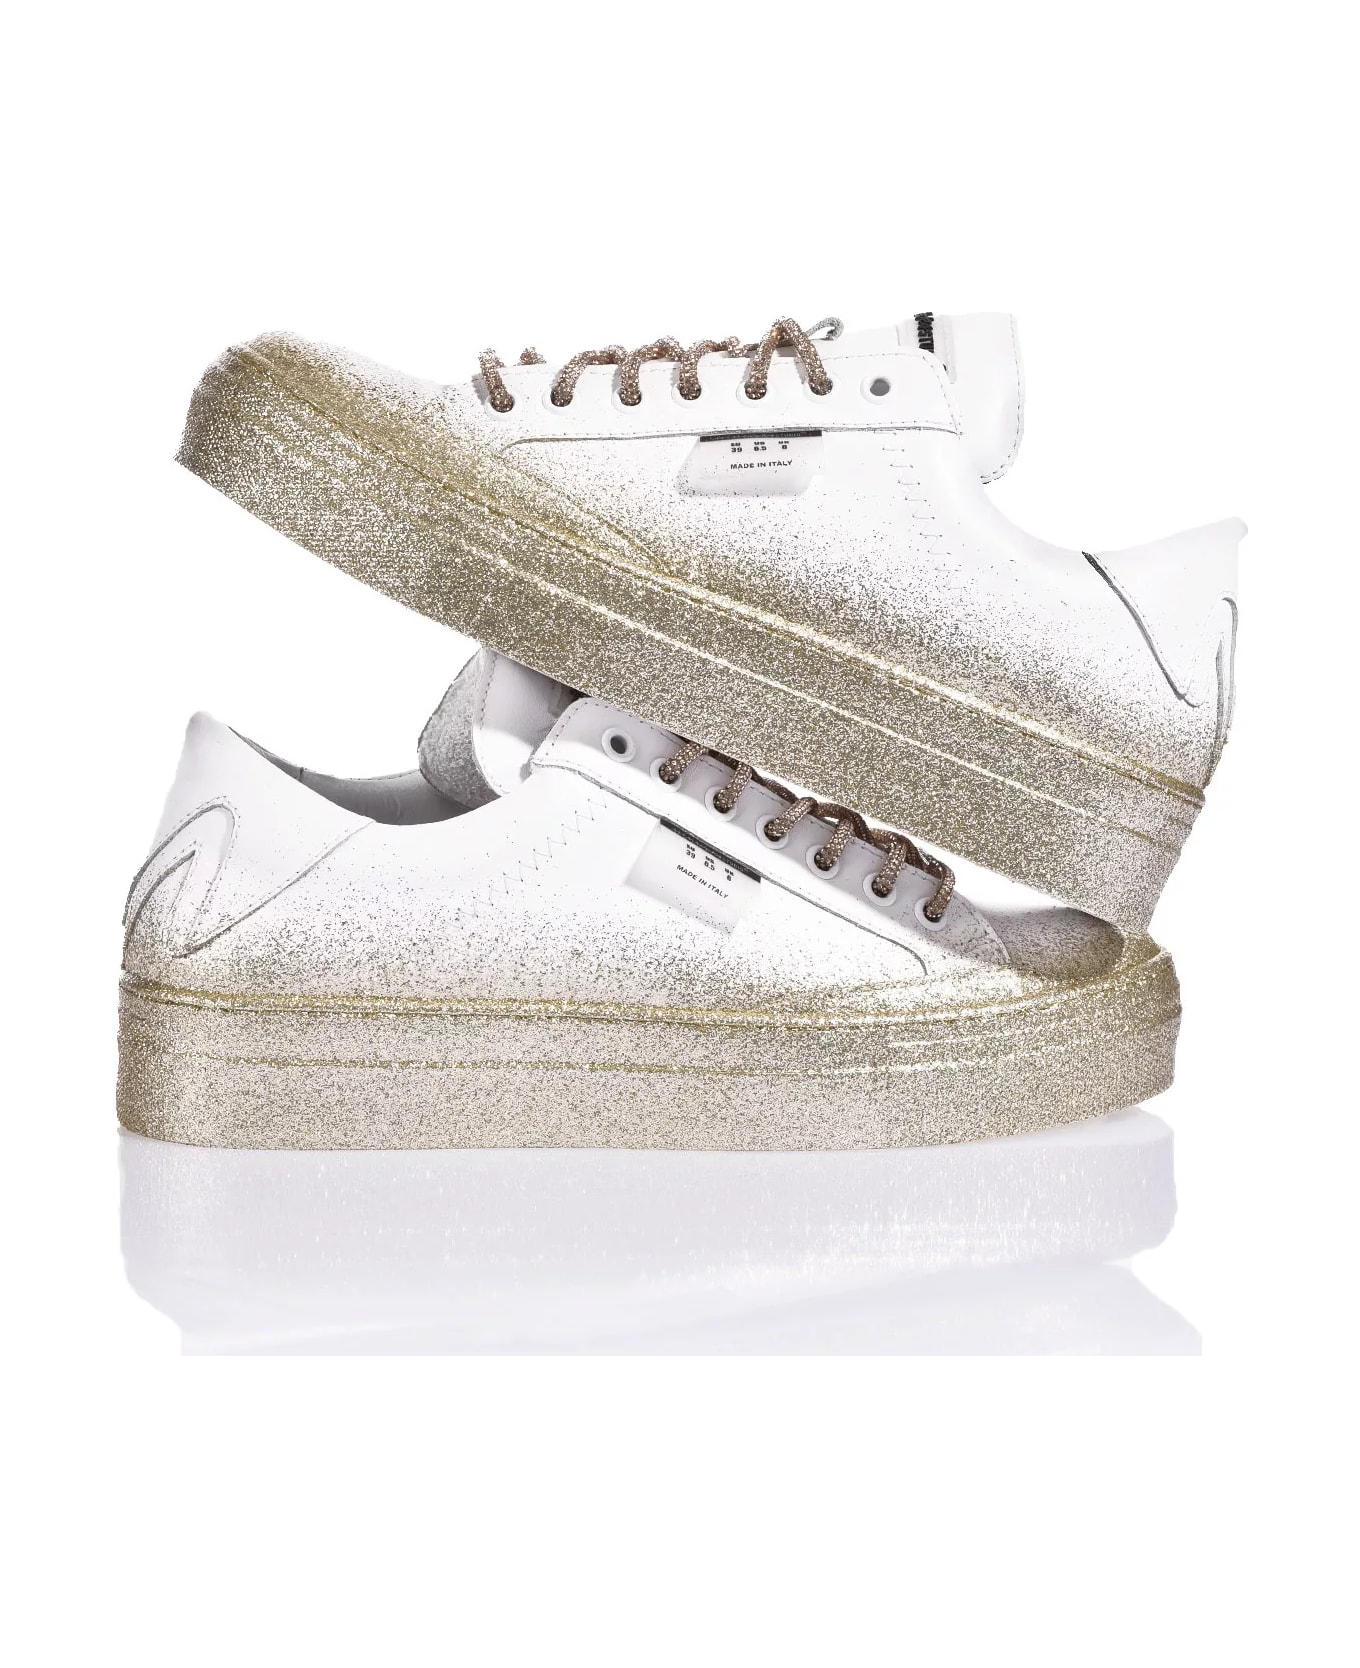 Mimanera Gold Glitter Sneakers | Mimanerashop.com ウェッジシューズ